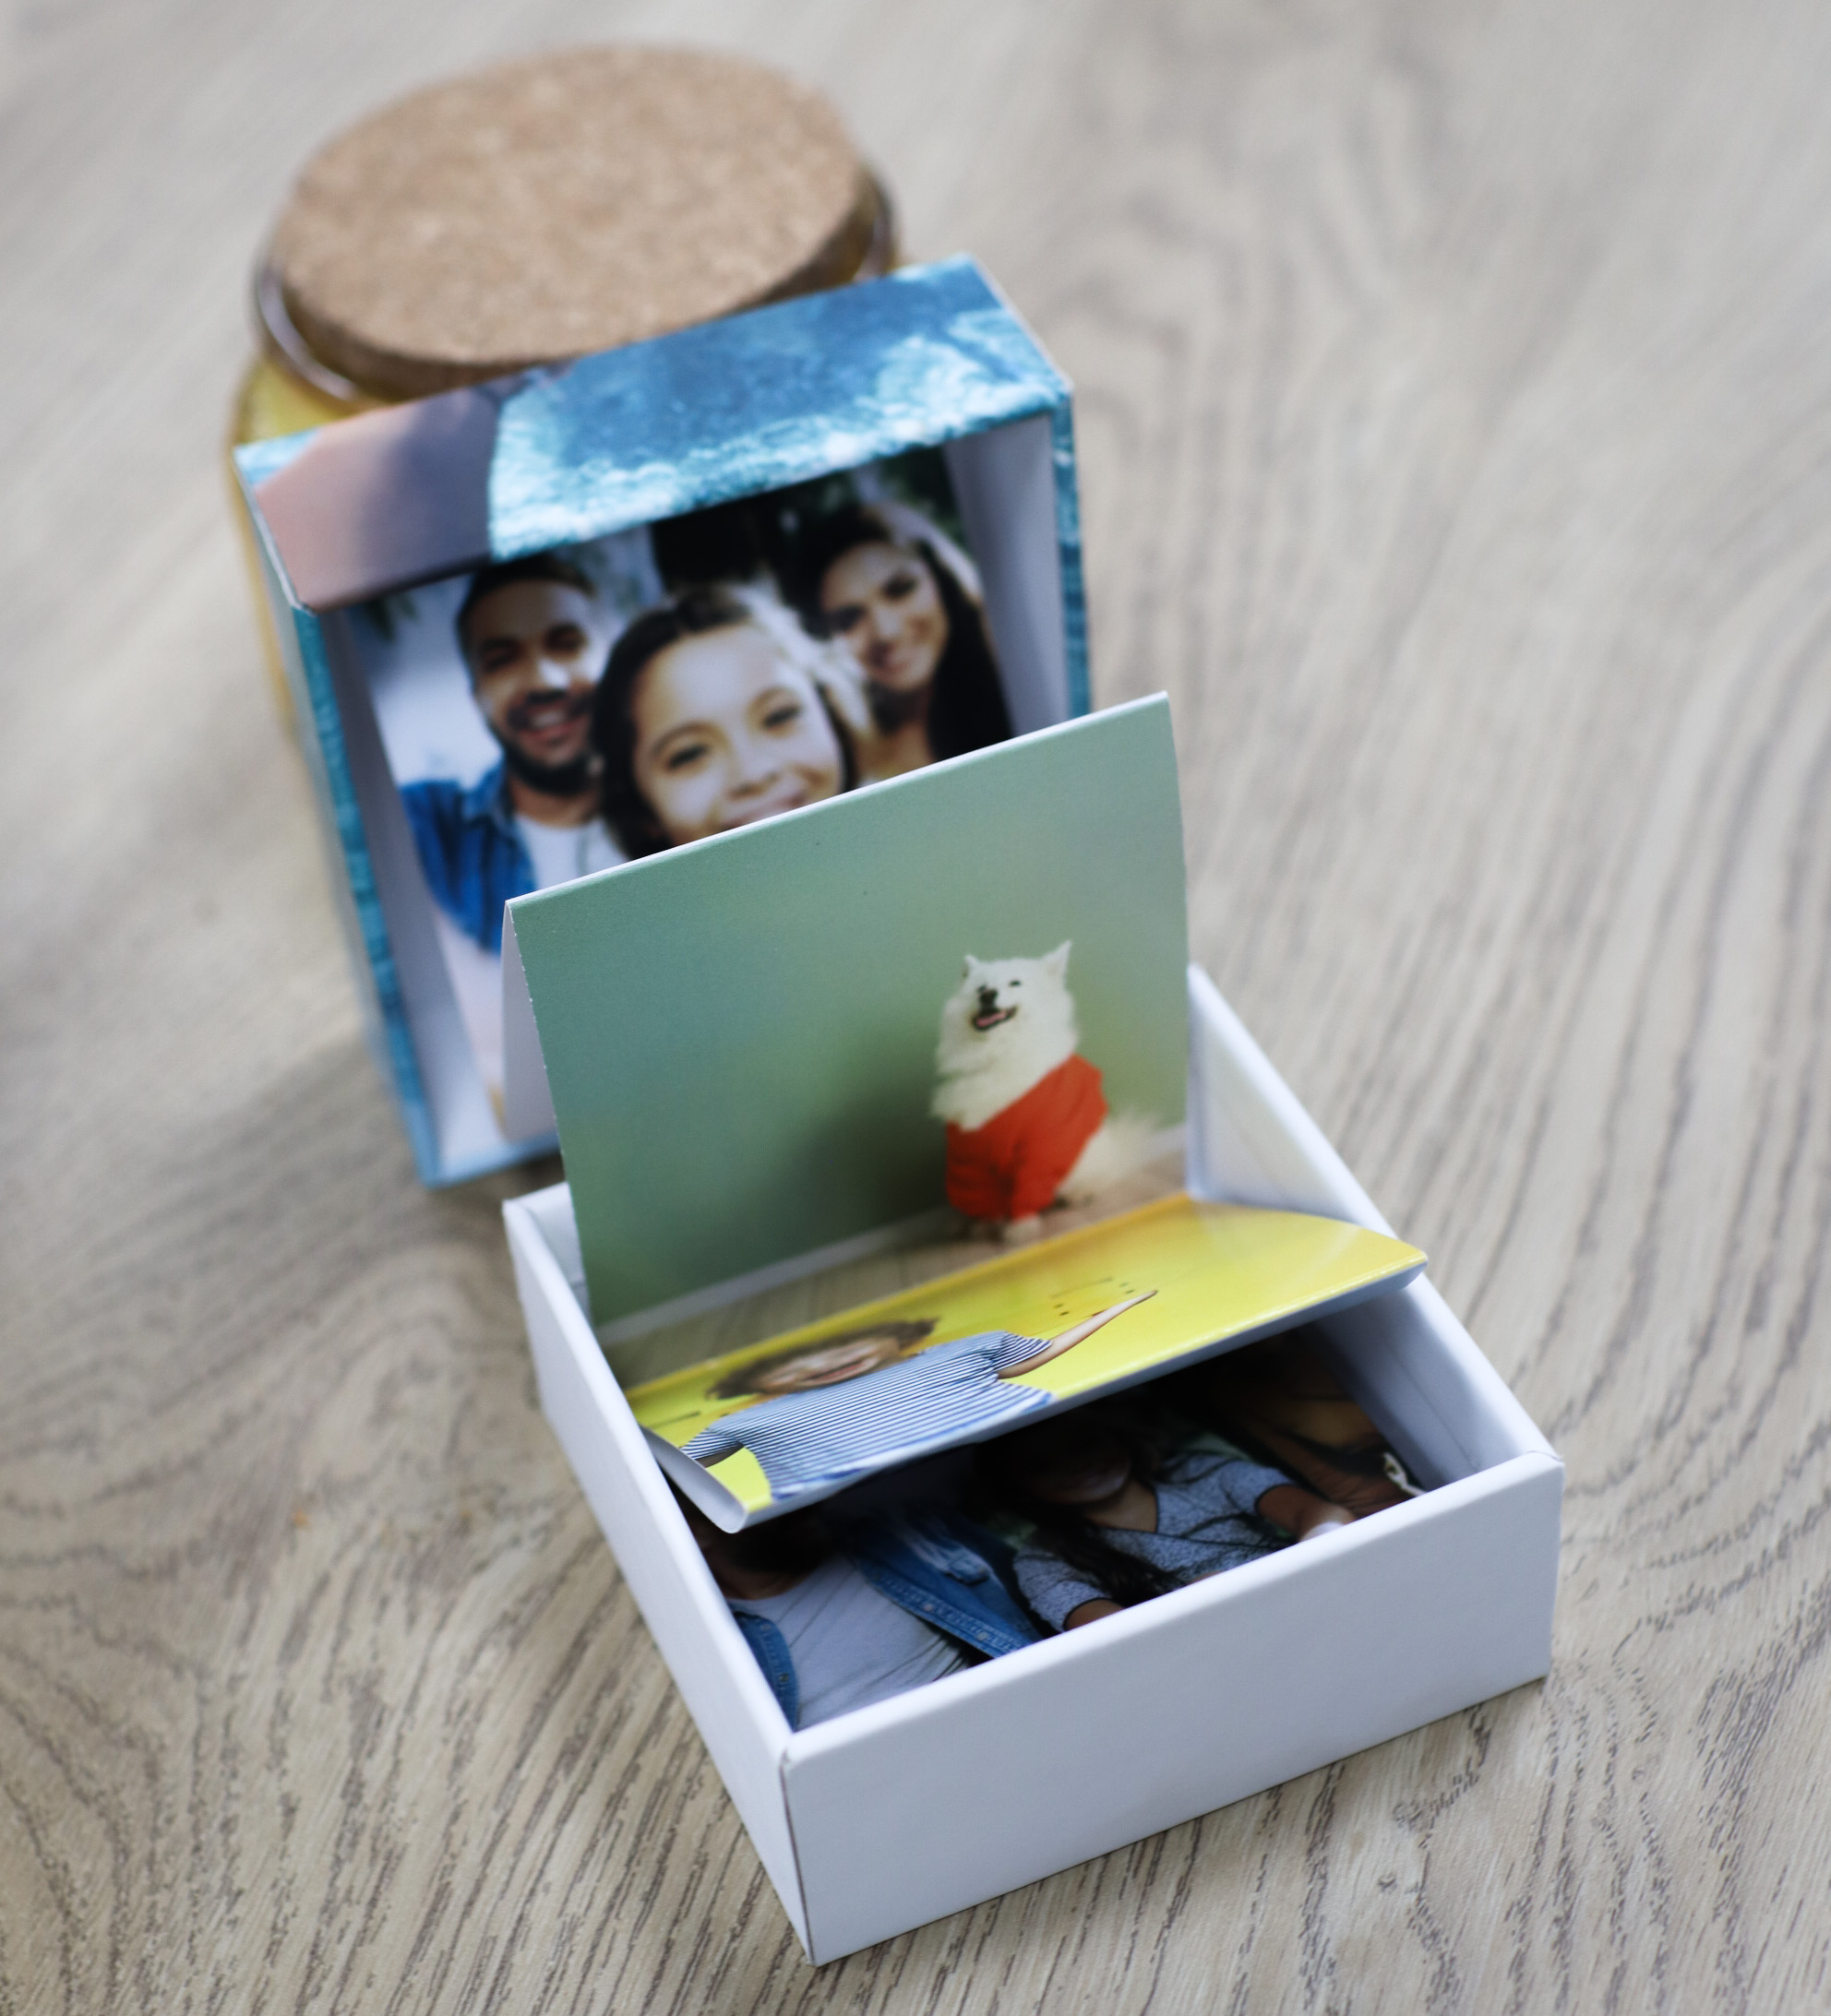 Pop-Up Photo Box (Gift Idea) - the DIY village